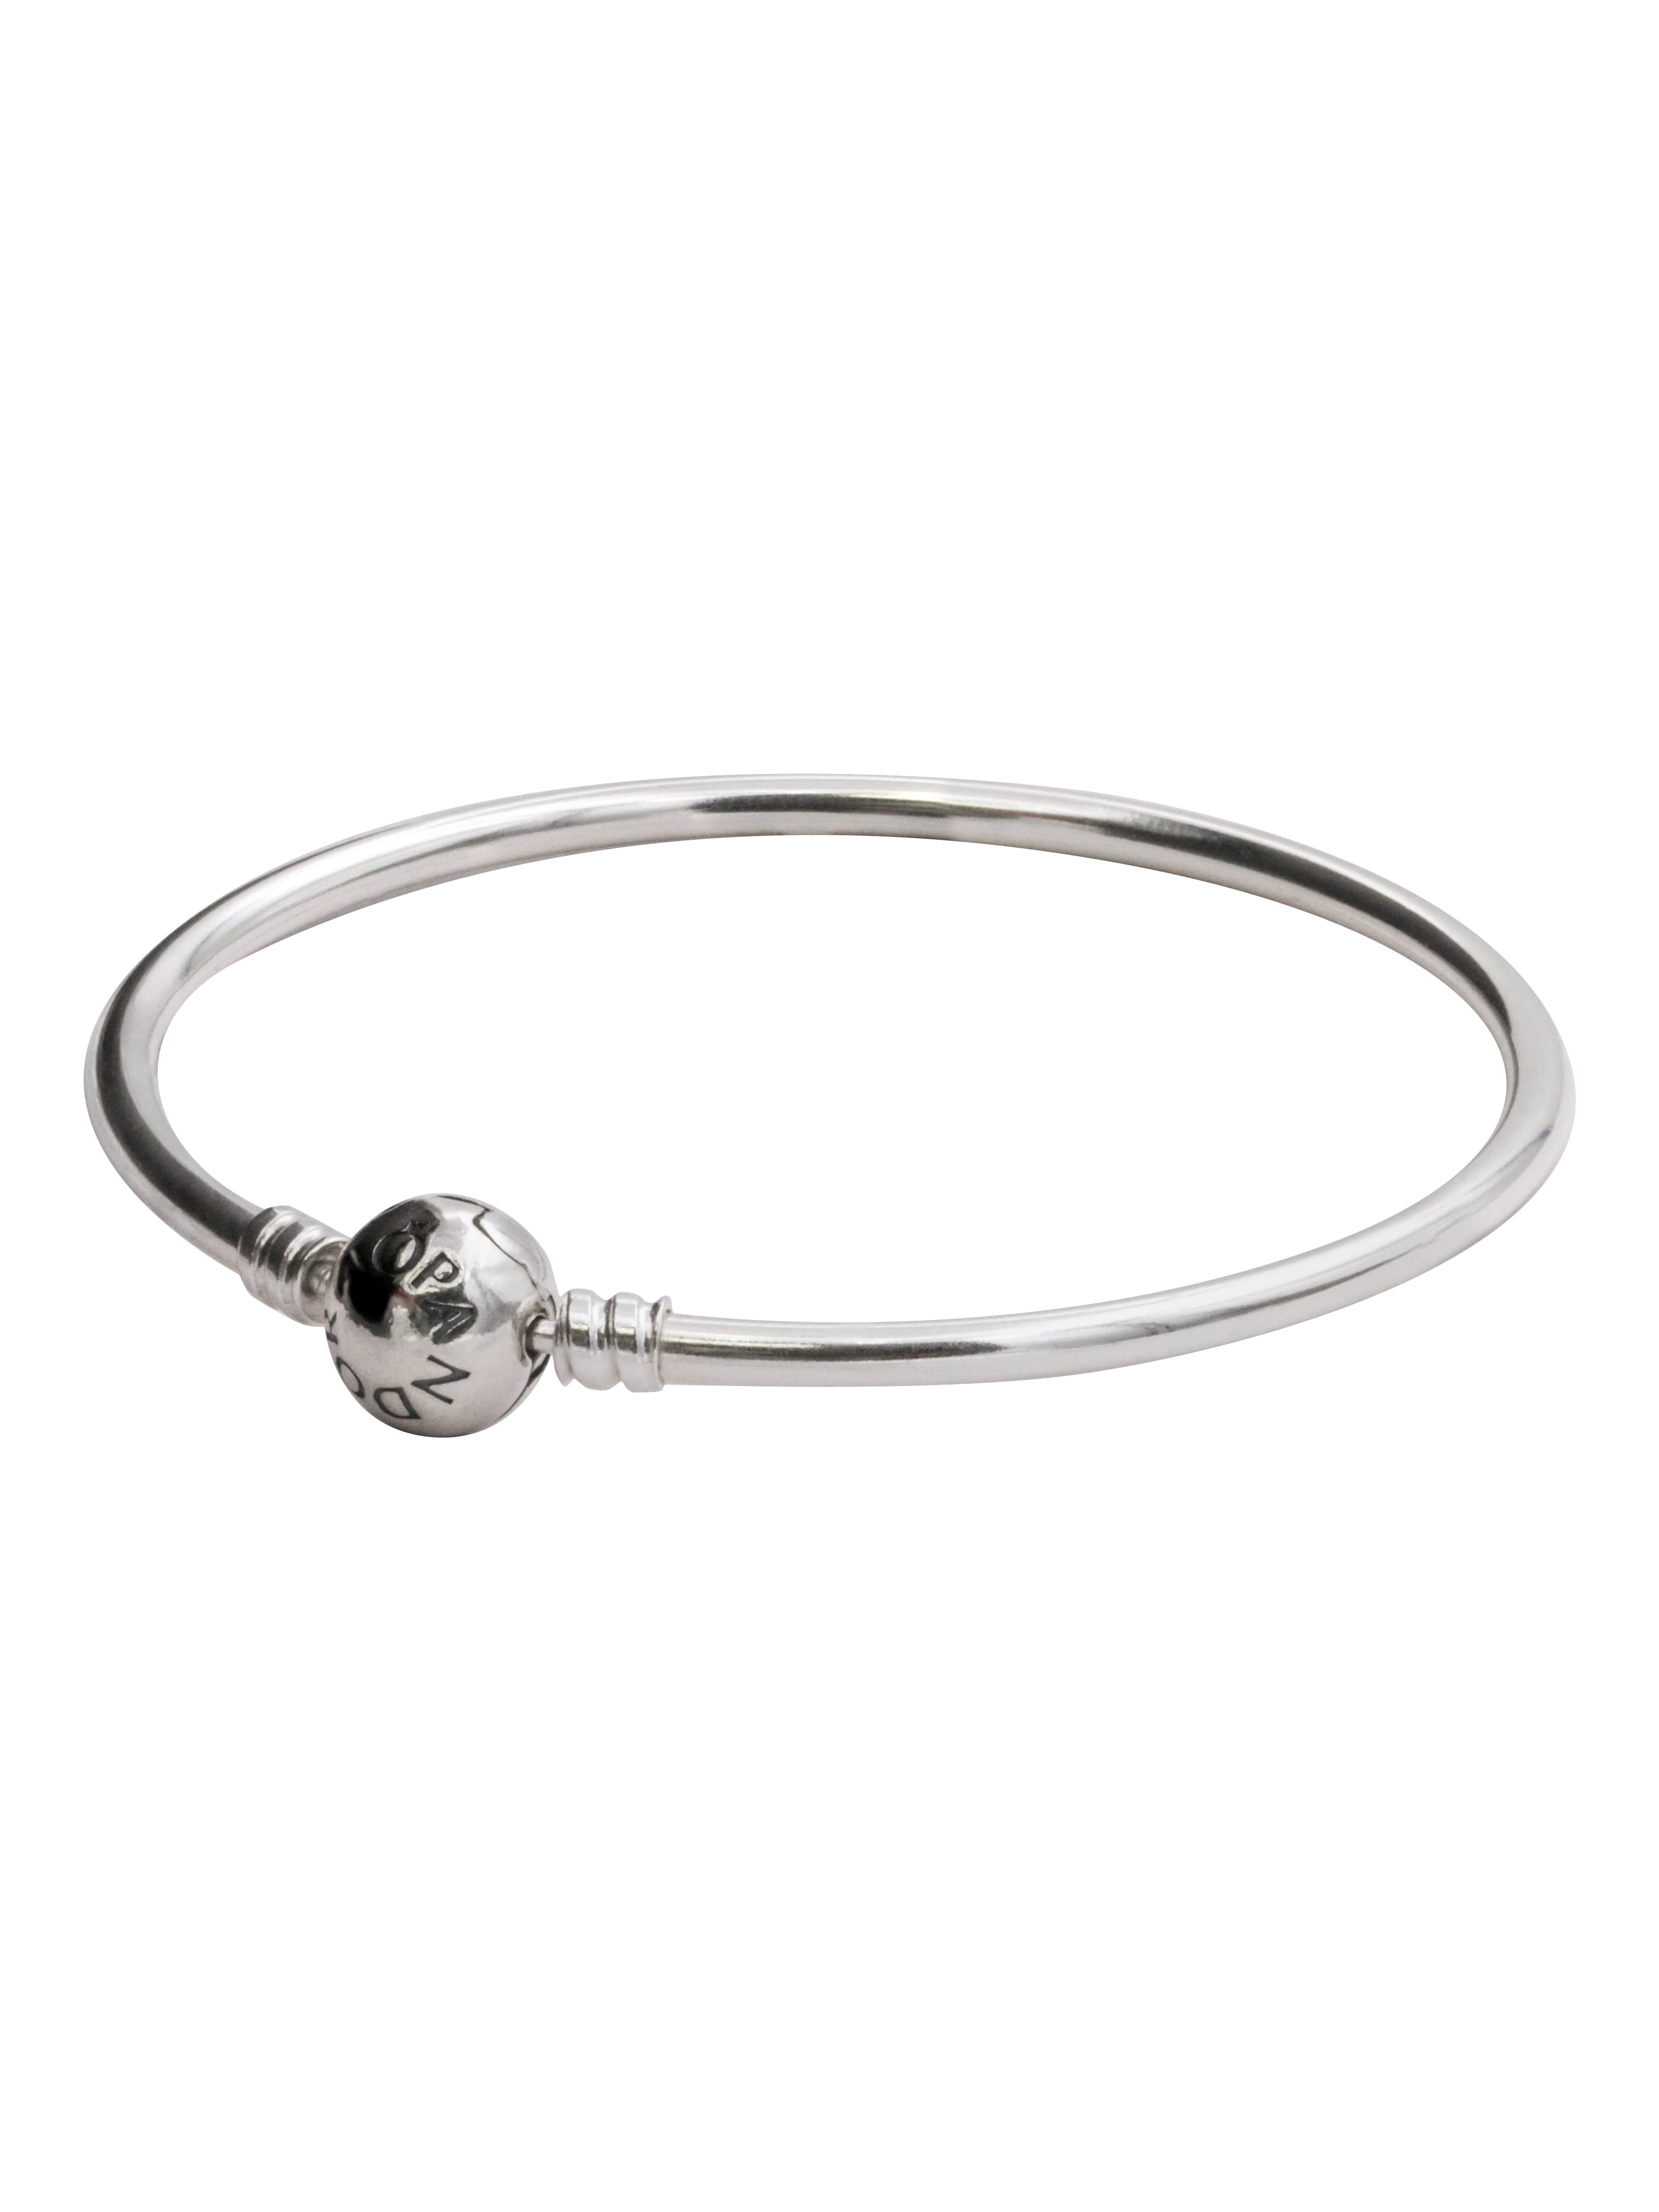 PANDORA sterling Silver Bangle Bracelet - 590713-18